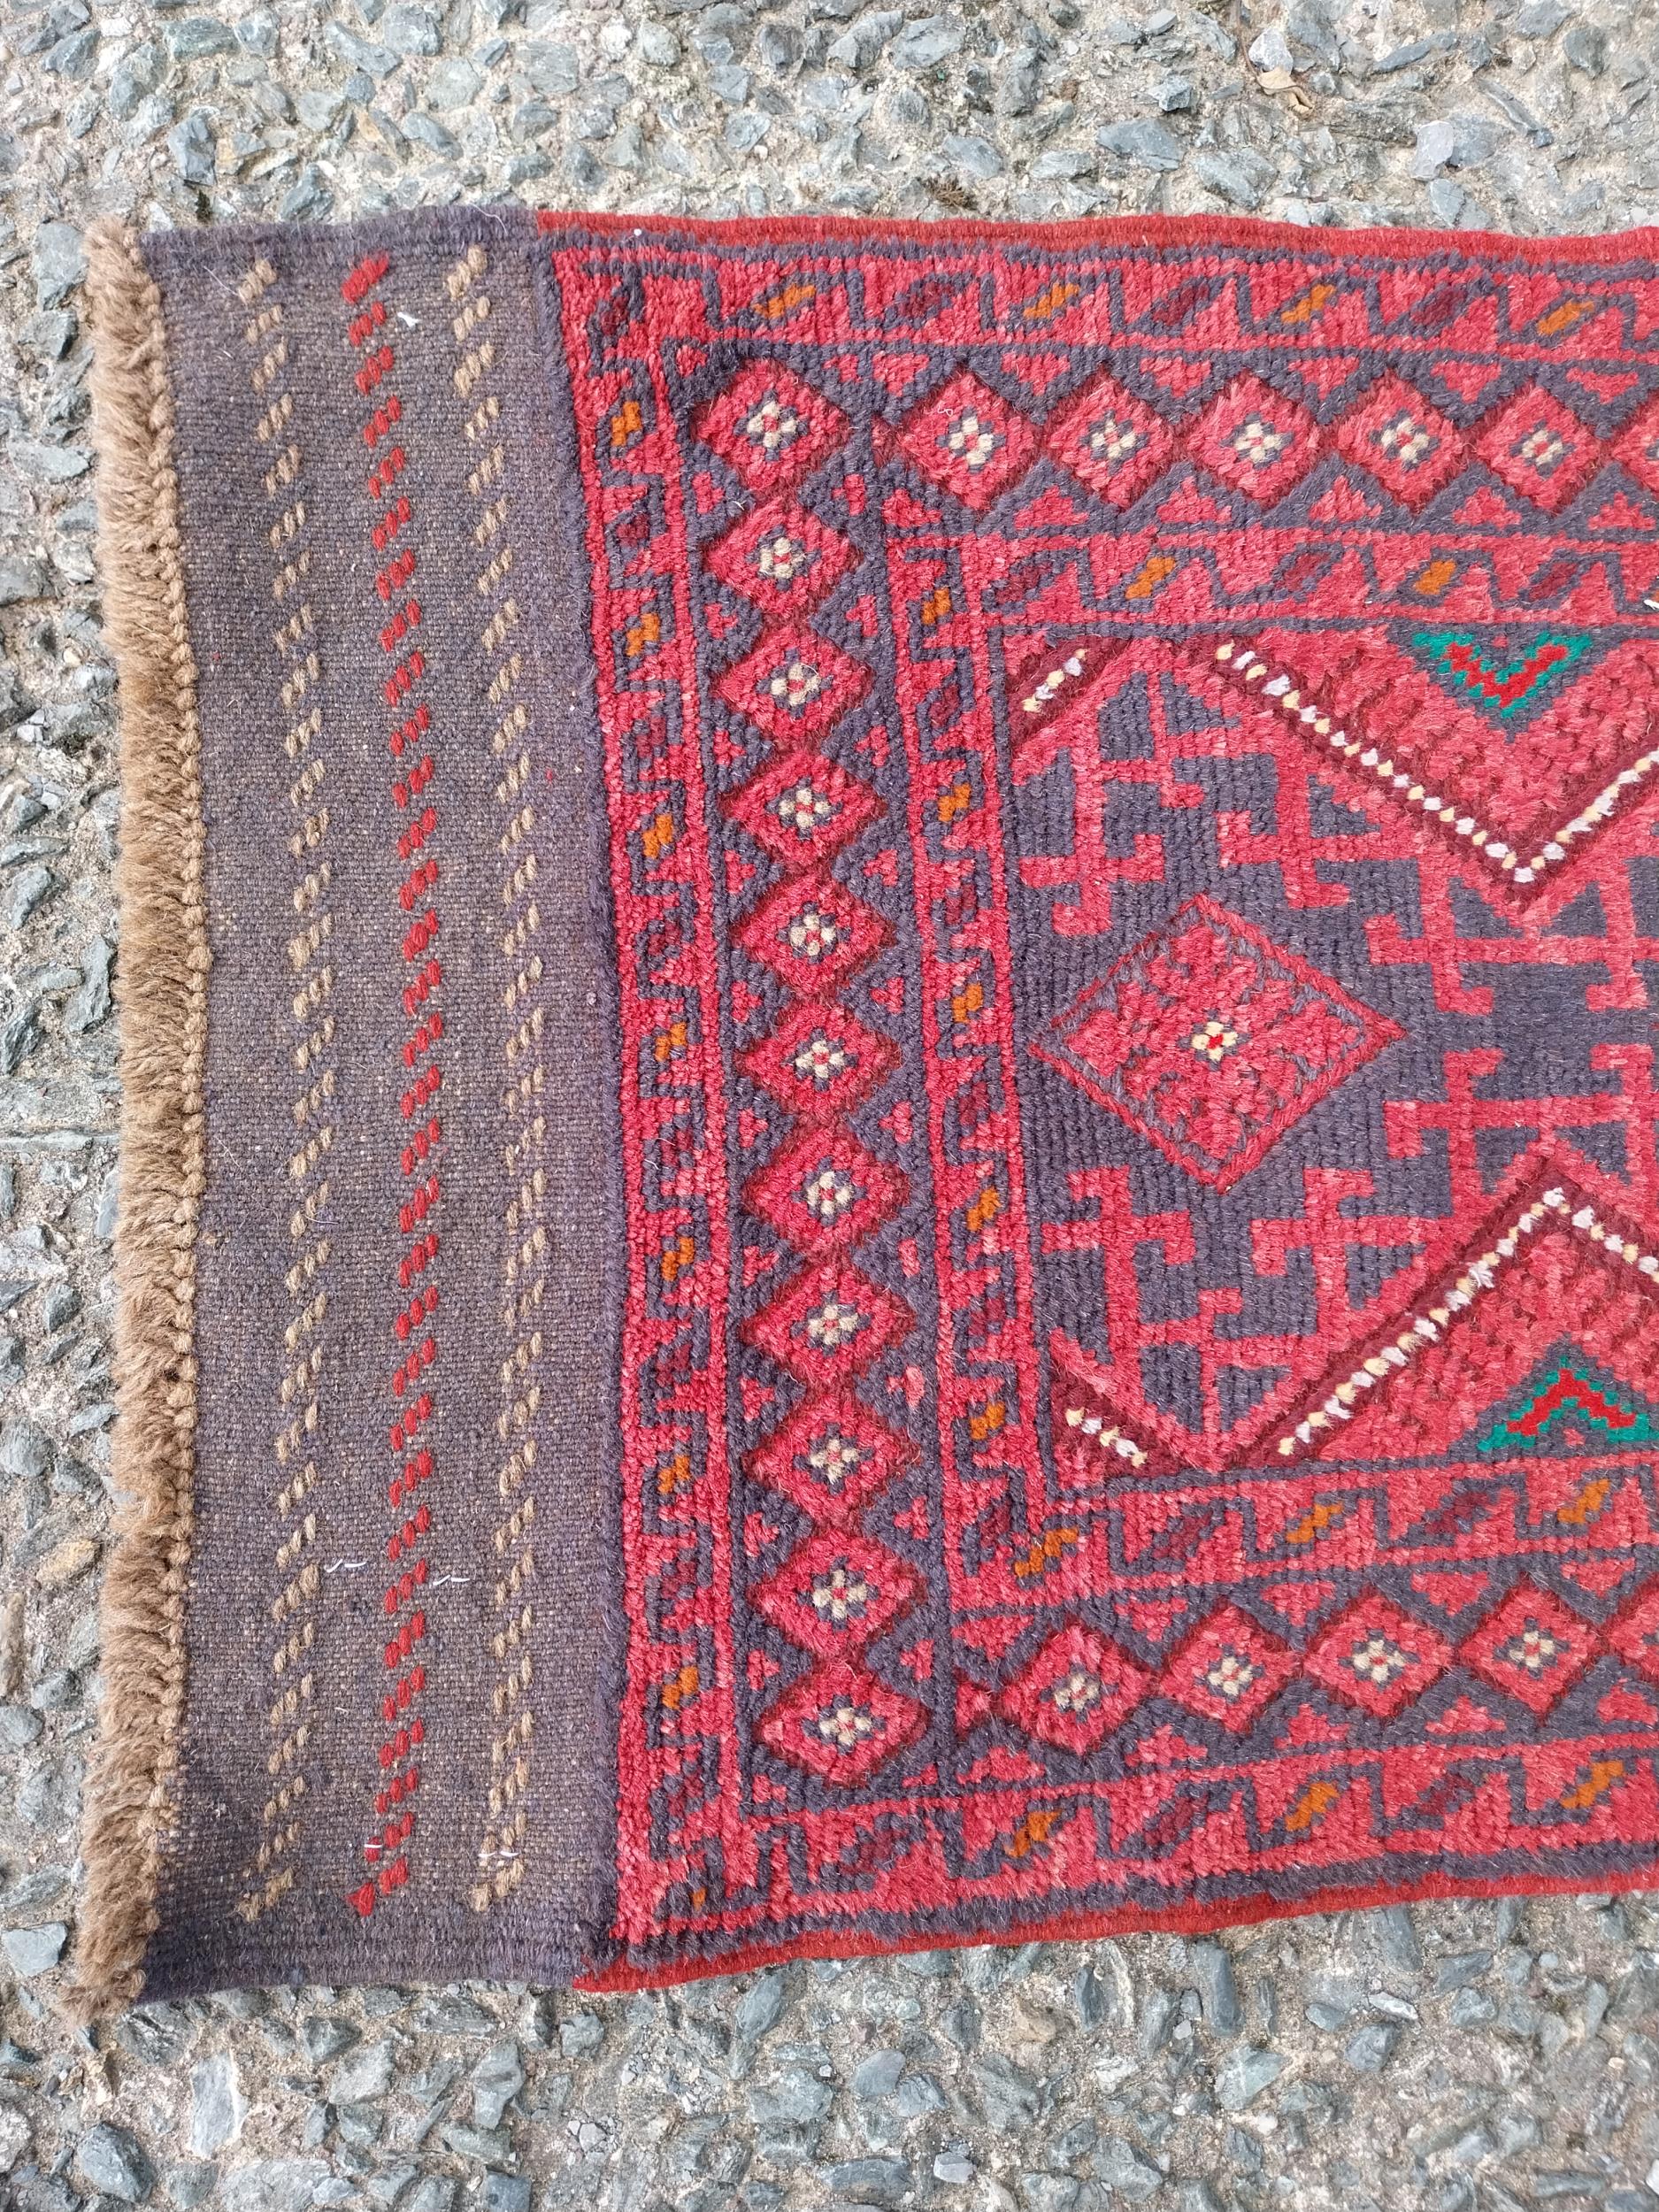 Good quality decorative carpet runner {260cm W x 60cm L} - Image 2 of 3